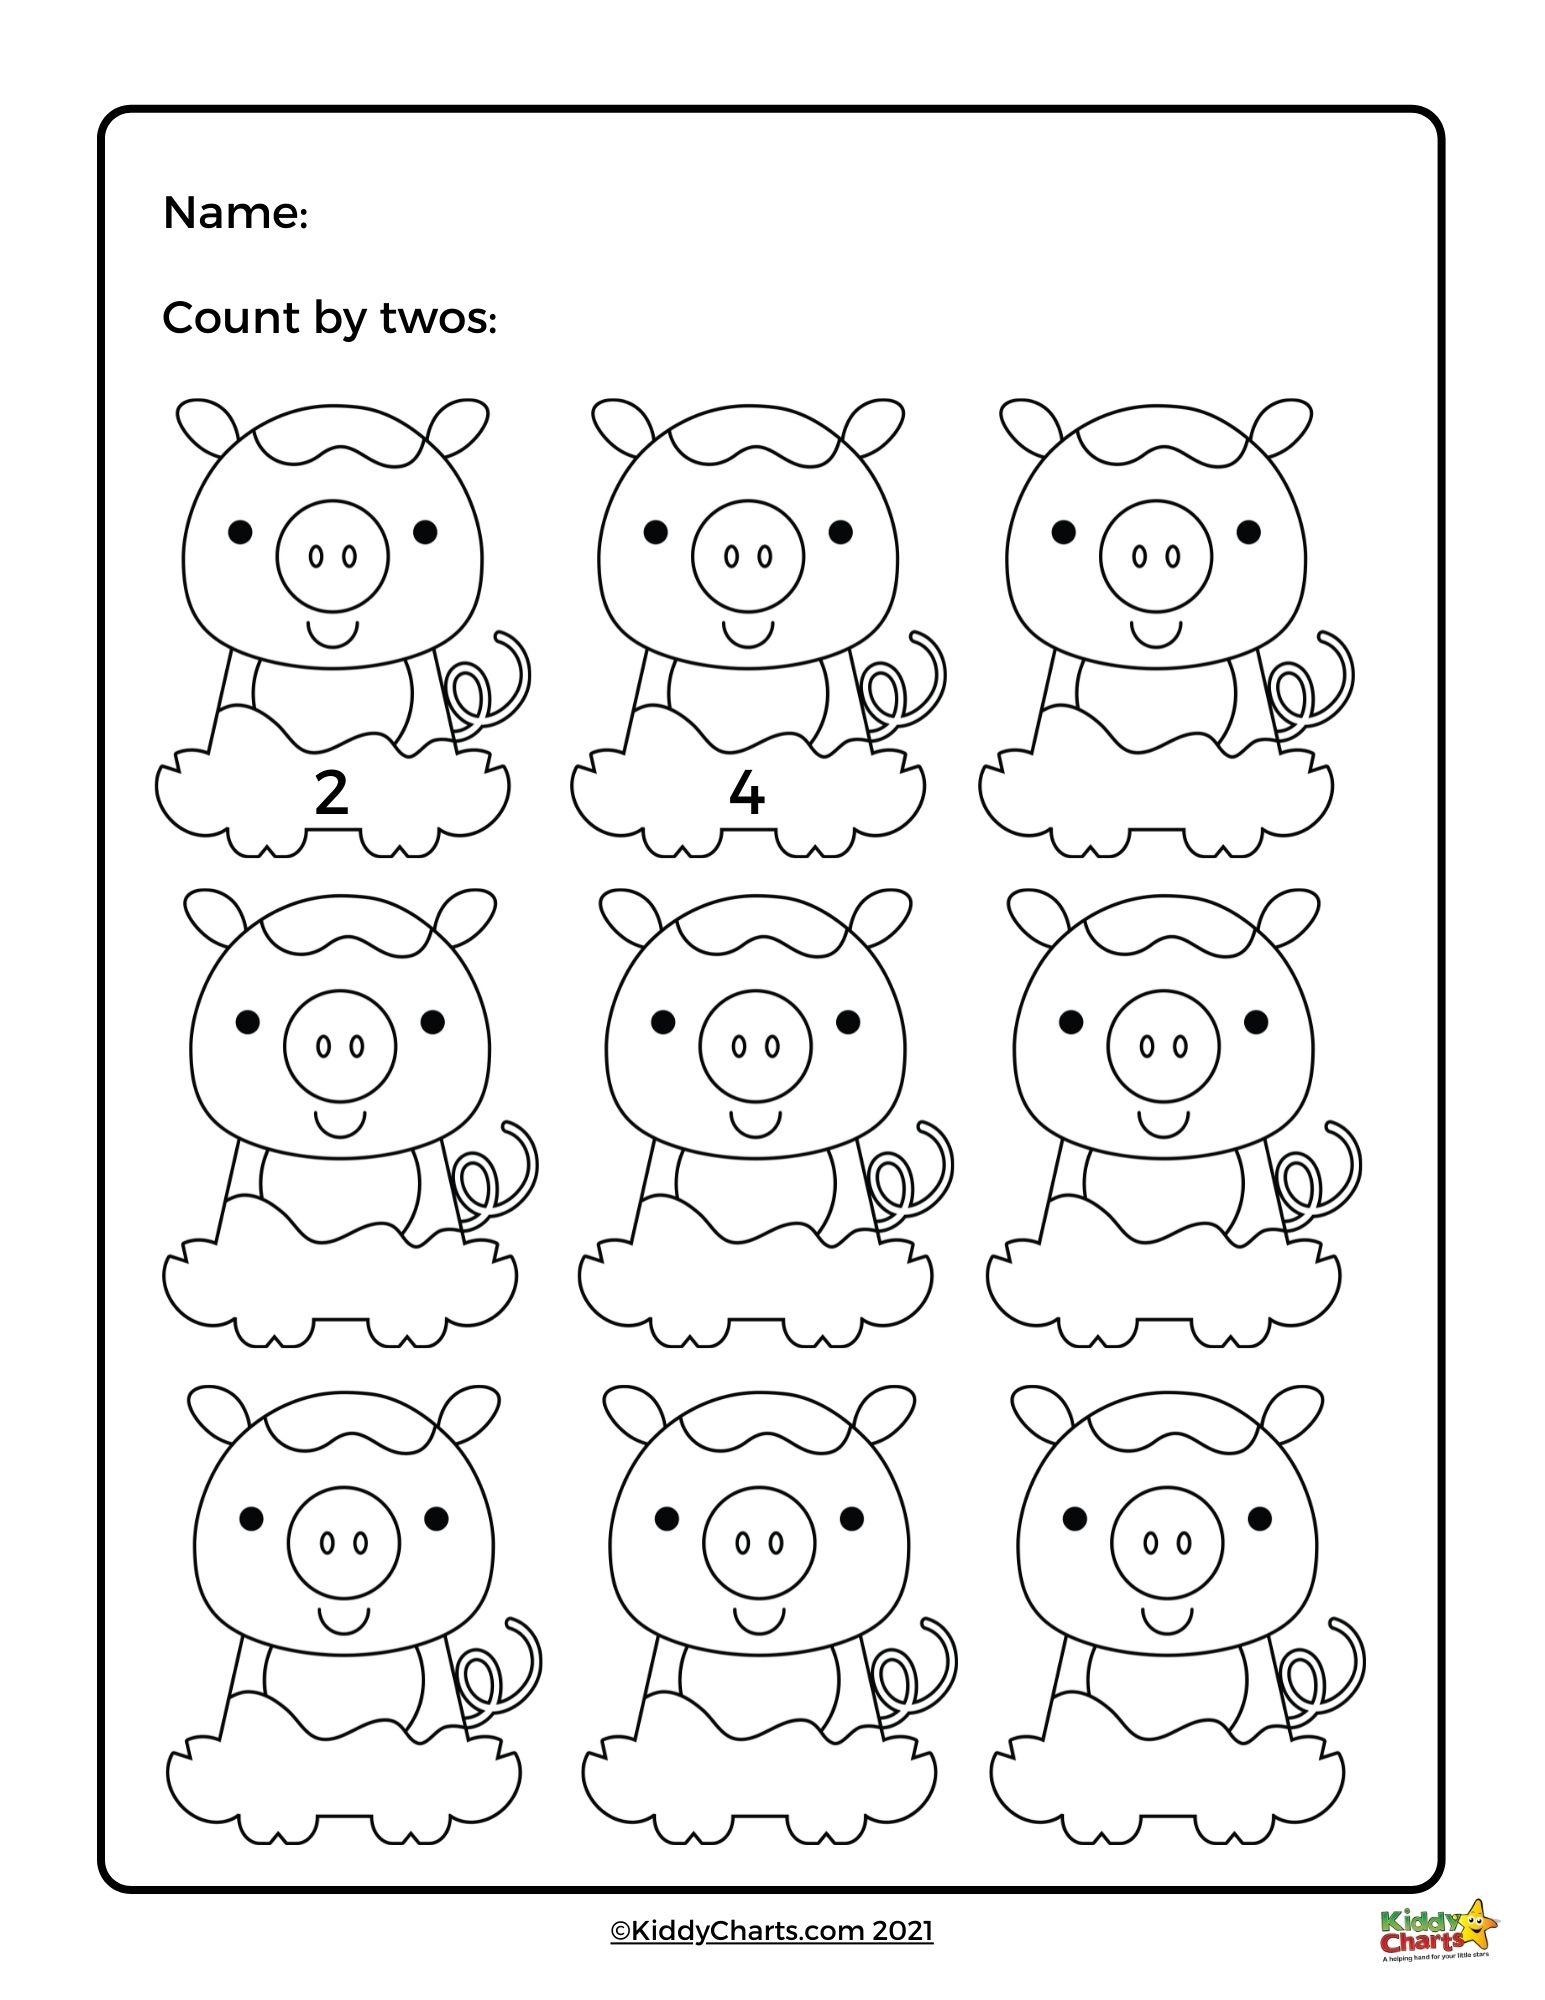 Kindergarten math worksheets: Animal math worksheets - KiddyCharts Shop